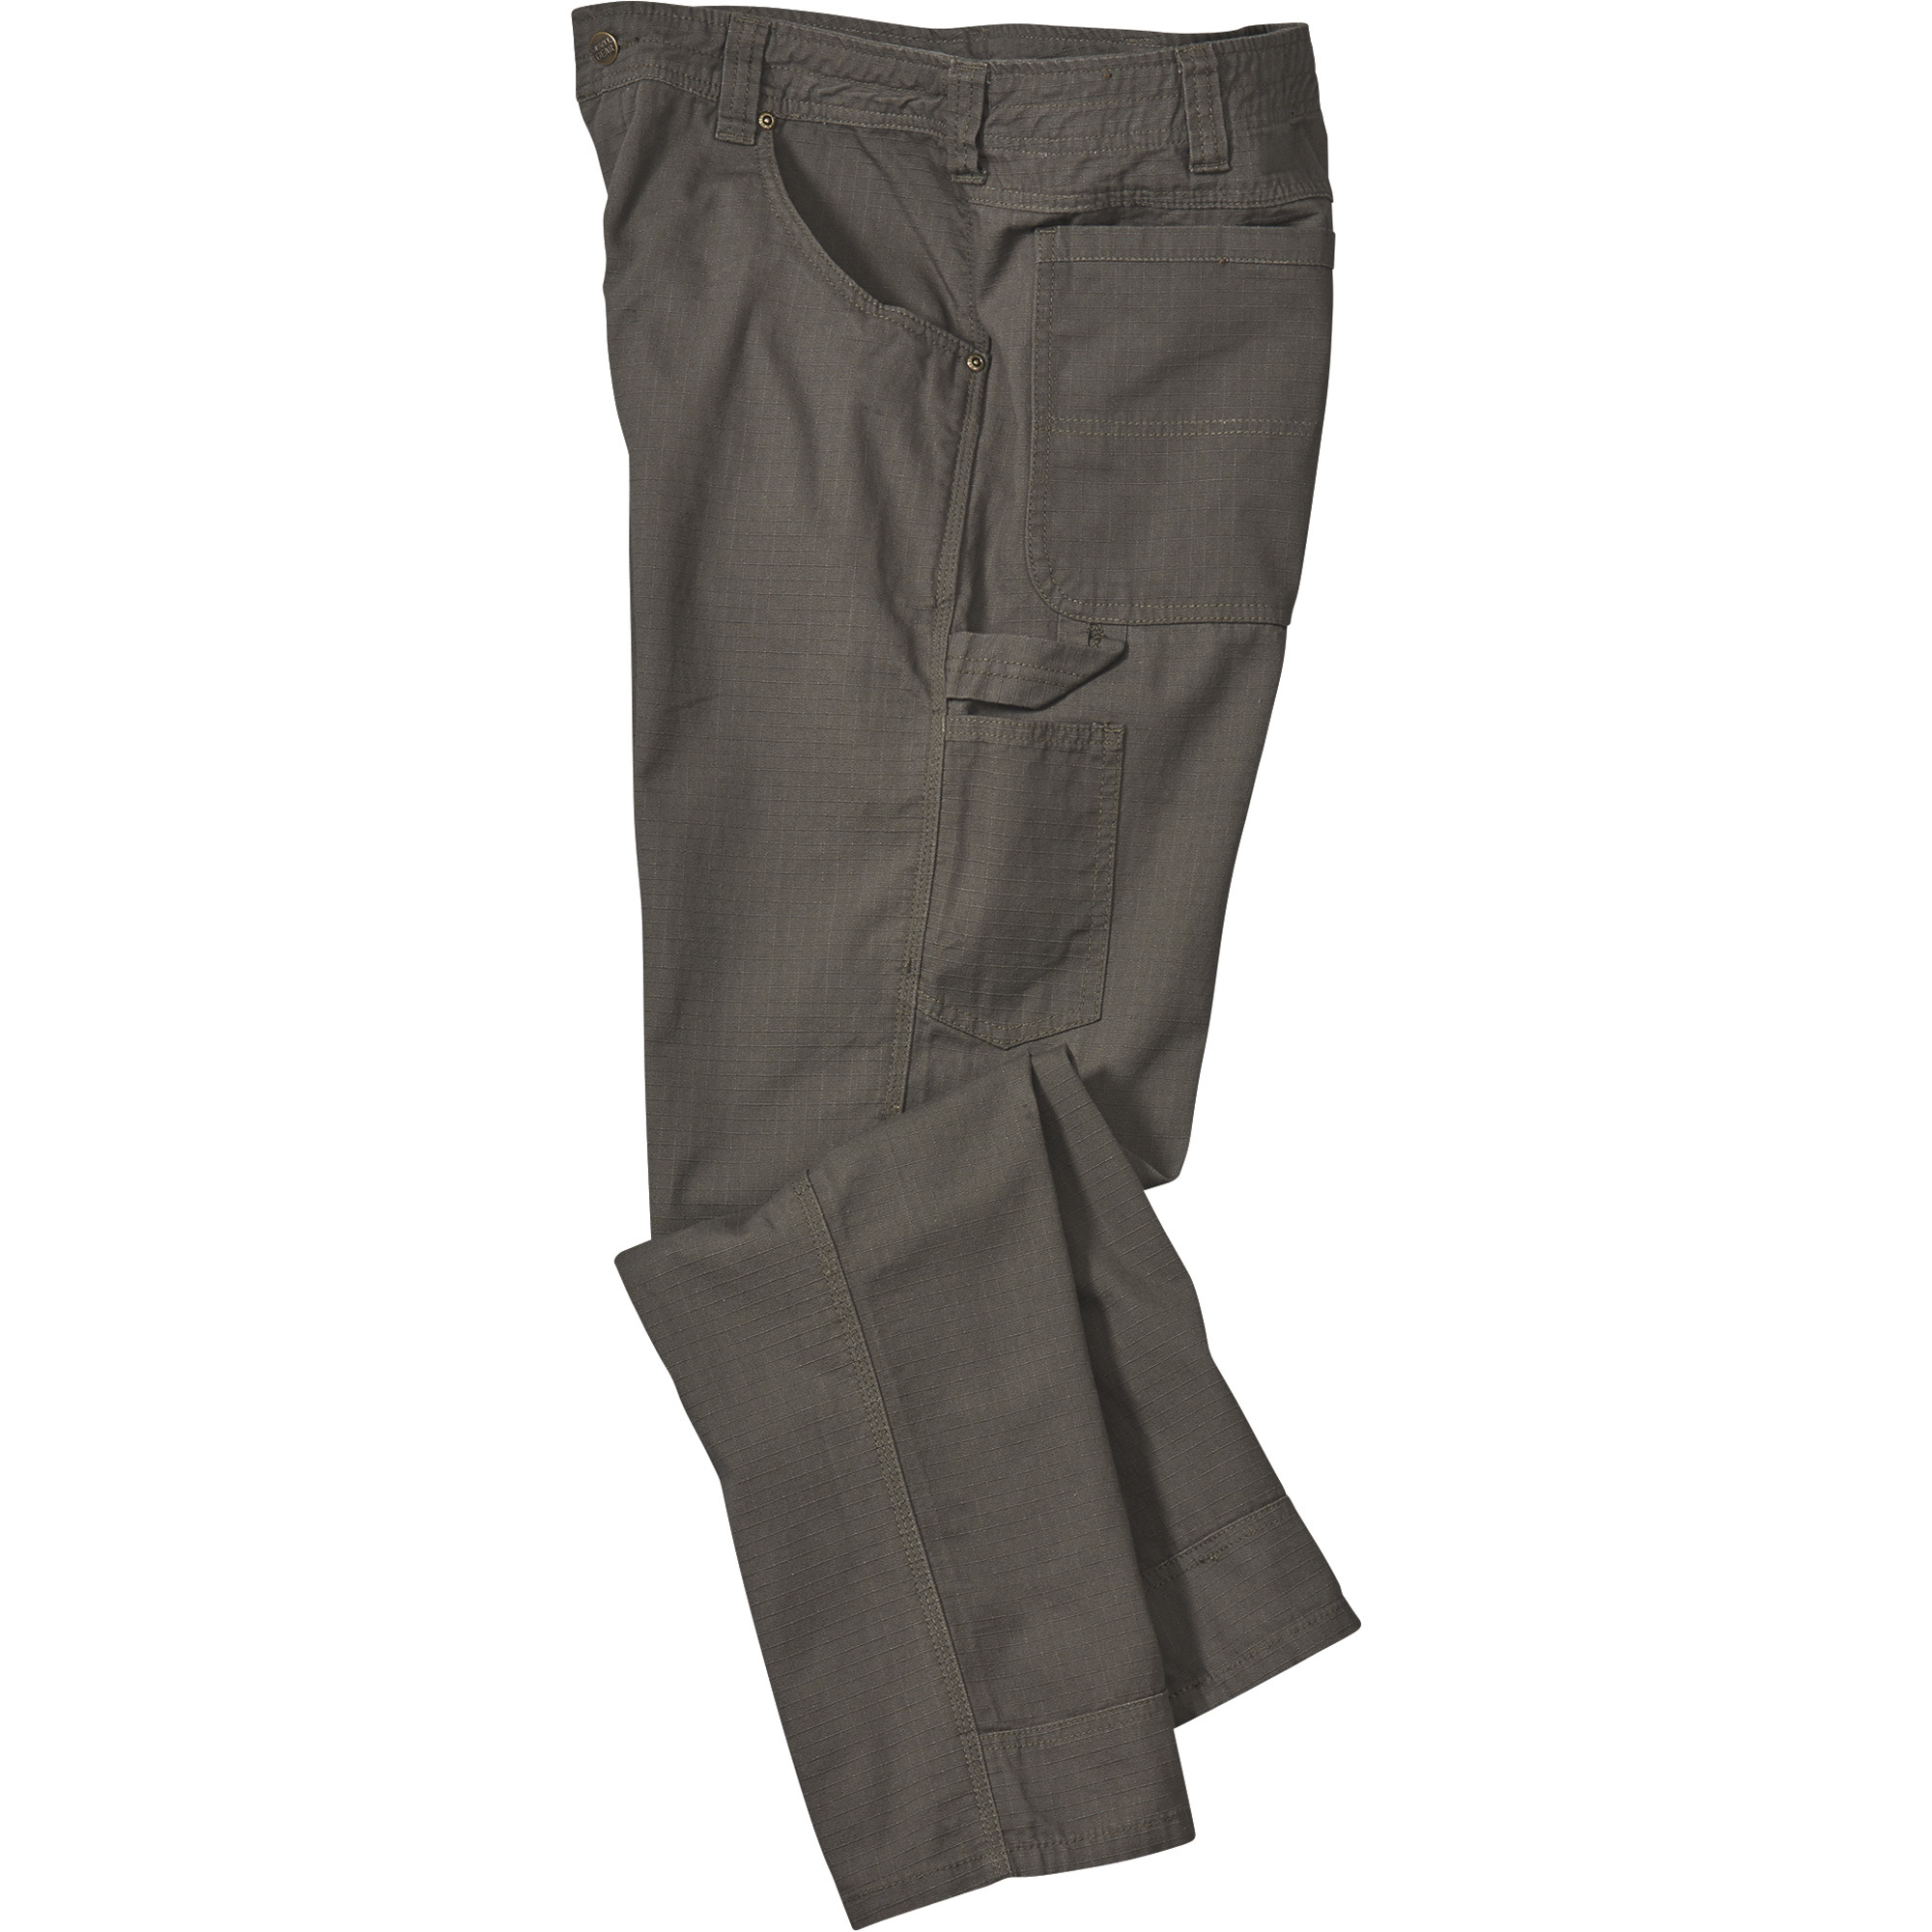 Gravel Gear Men's Cotton Ripstop Carpenter Pants with Teflon Fabric Protector â Moss, 38Inch Waist x 32Inch Inseam